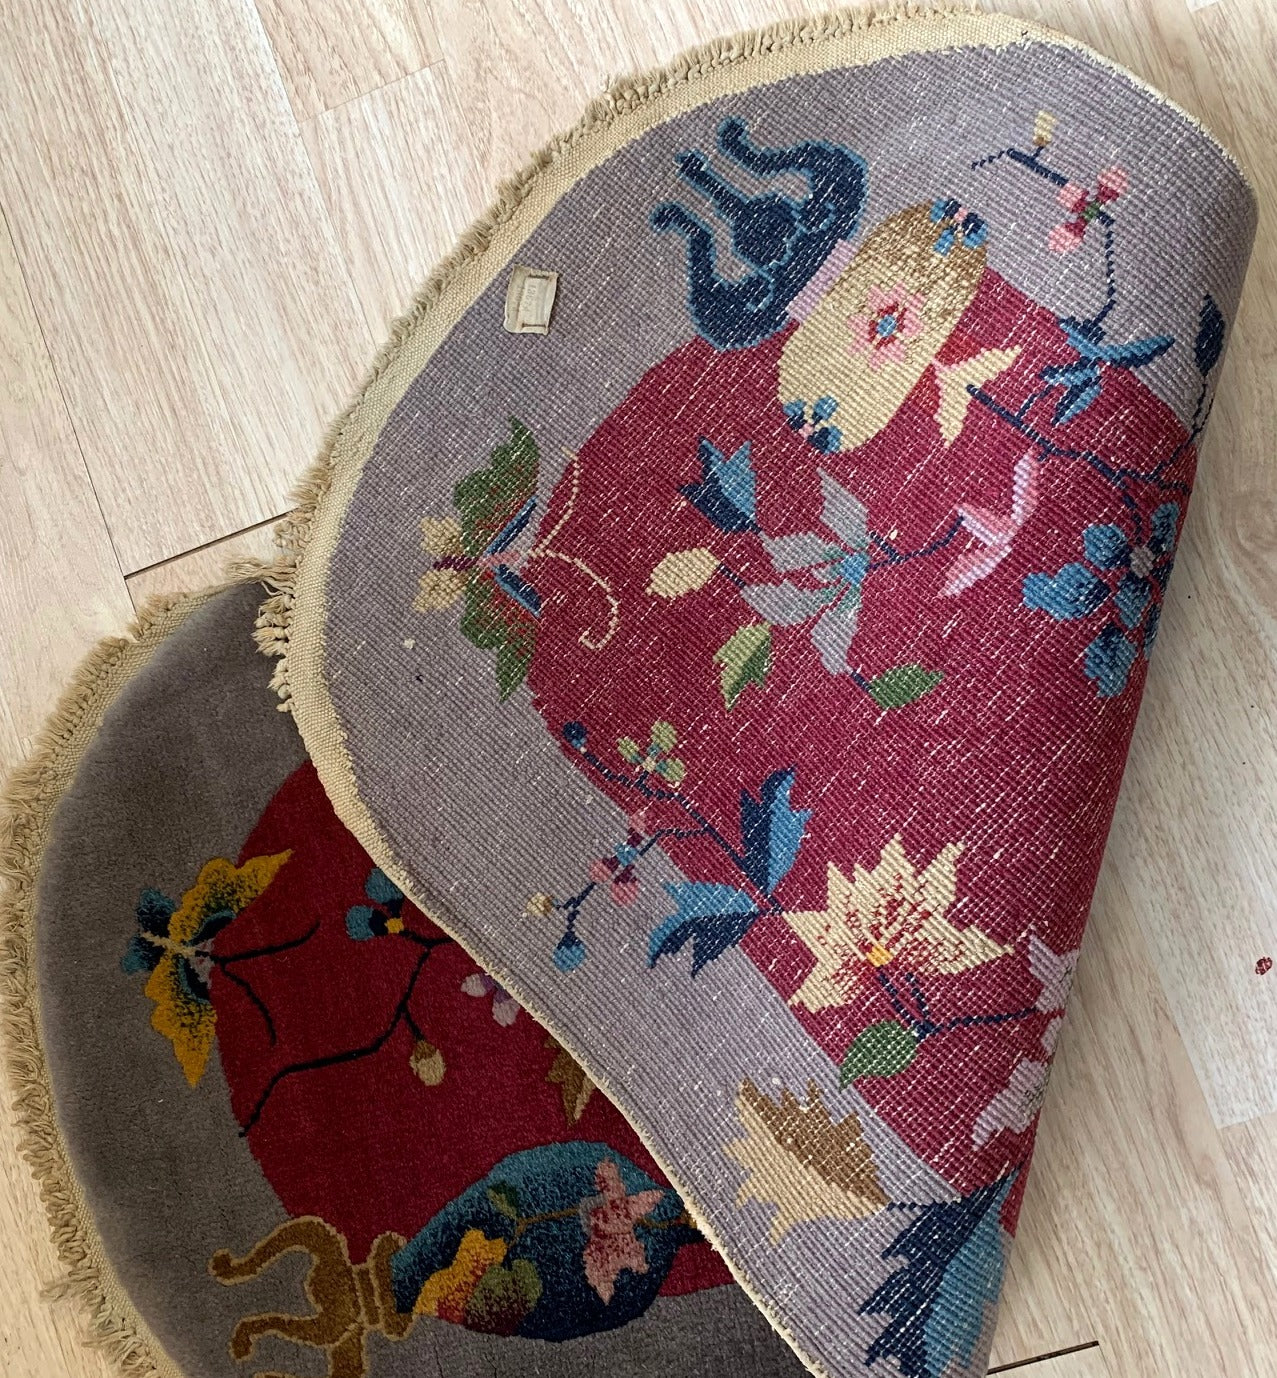 Handmade antique Art Deco Chinese rug 1920s